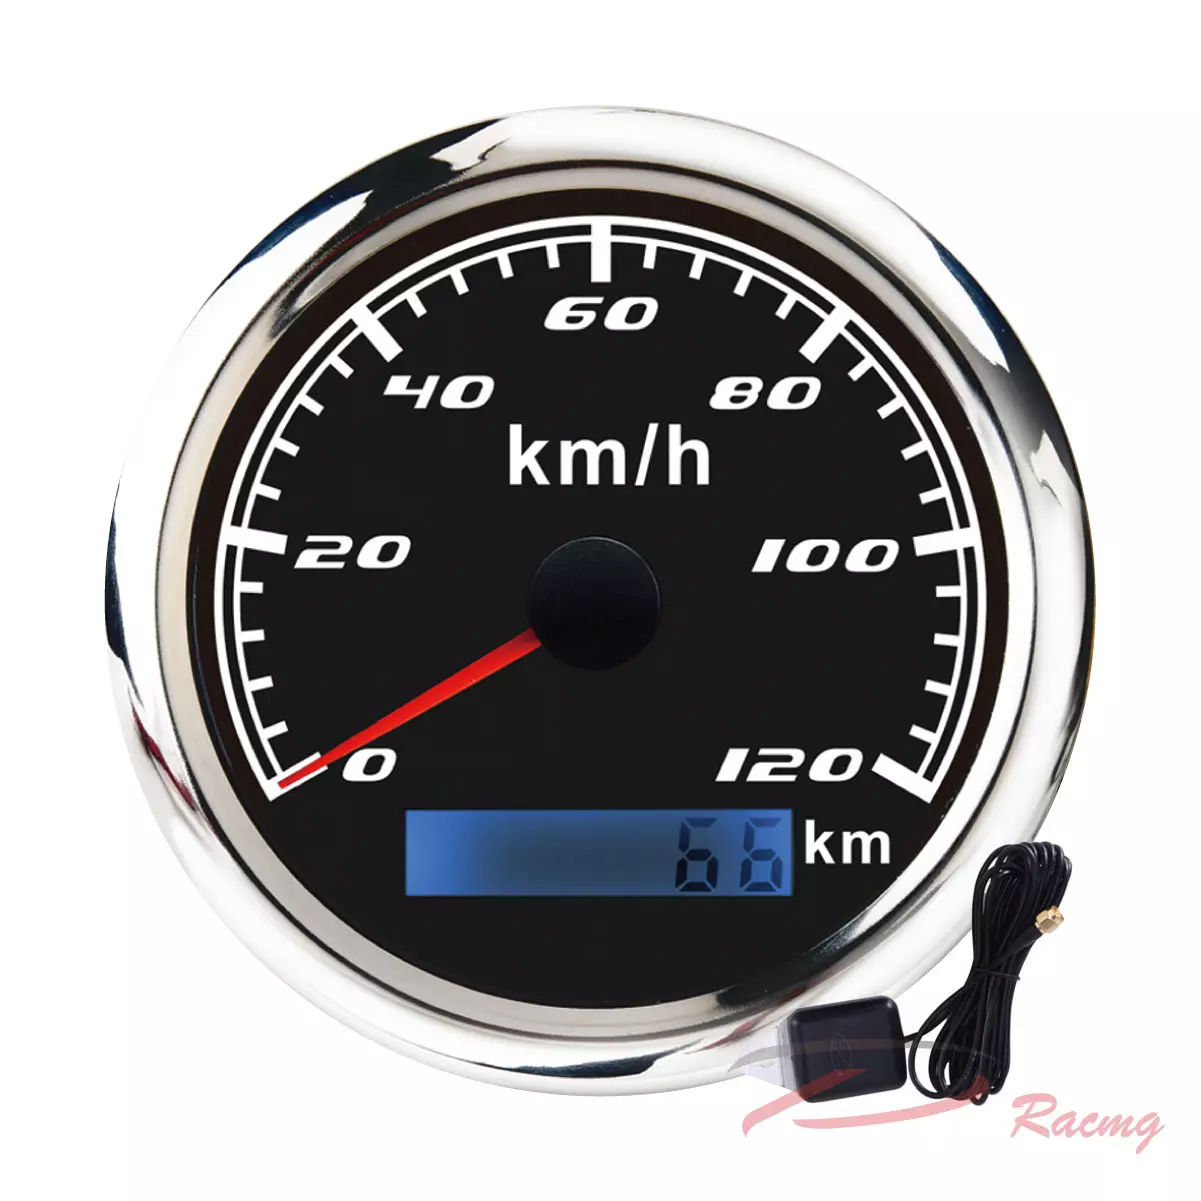 Dracing, Depo racing, AutoMeter, gps speedometer, electric speedometer, digital speedometer, mechanical speedometer, 3-3/8" speedometer, 5" speedometer, MPH speedometer, KM/H speedometer, 0-50 MPH speedometer, 0-100 MPH speedometer, 0-120 MPH speedometer, 0-140 MPH speedometer, 0-160 MPH speedometer, 180 MPH speedometer, 0-200 MPH speedometer, 0-190 KM/H speedometer, 0-225 KM/H speedometer, 260 KM/H speedometer, air-core speedometer, digital stepper motor speedometer, mechanical speedometer, analog speedometer, easy calibration speedometer, fast speedometer, accurate speedometer, durable speedometer, best speedometer, ultra-lite speedometer, pro-comp speedometer, cobalt speedometer, carbon fiber speedometer, racing speedometer, car speedometer, truck speedometer, suv speedometer, monster speedometers, motorcycle speedometers, GPS Speedometers, AutoMeter GPS Speedo, AutoMeter GPS Speedometer, AutoMeter GPS Speedometers, Marine GPS Speedometers, Motorcycle GPS Speedometers